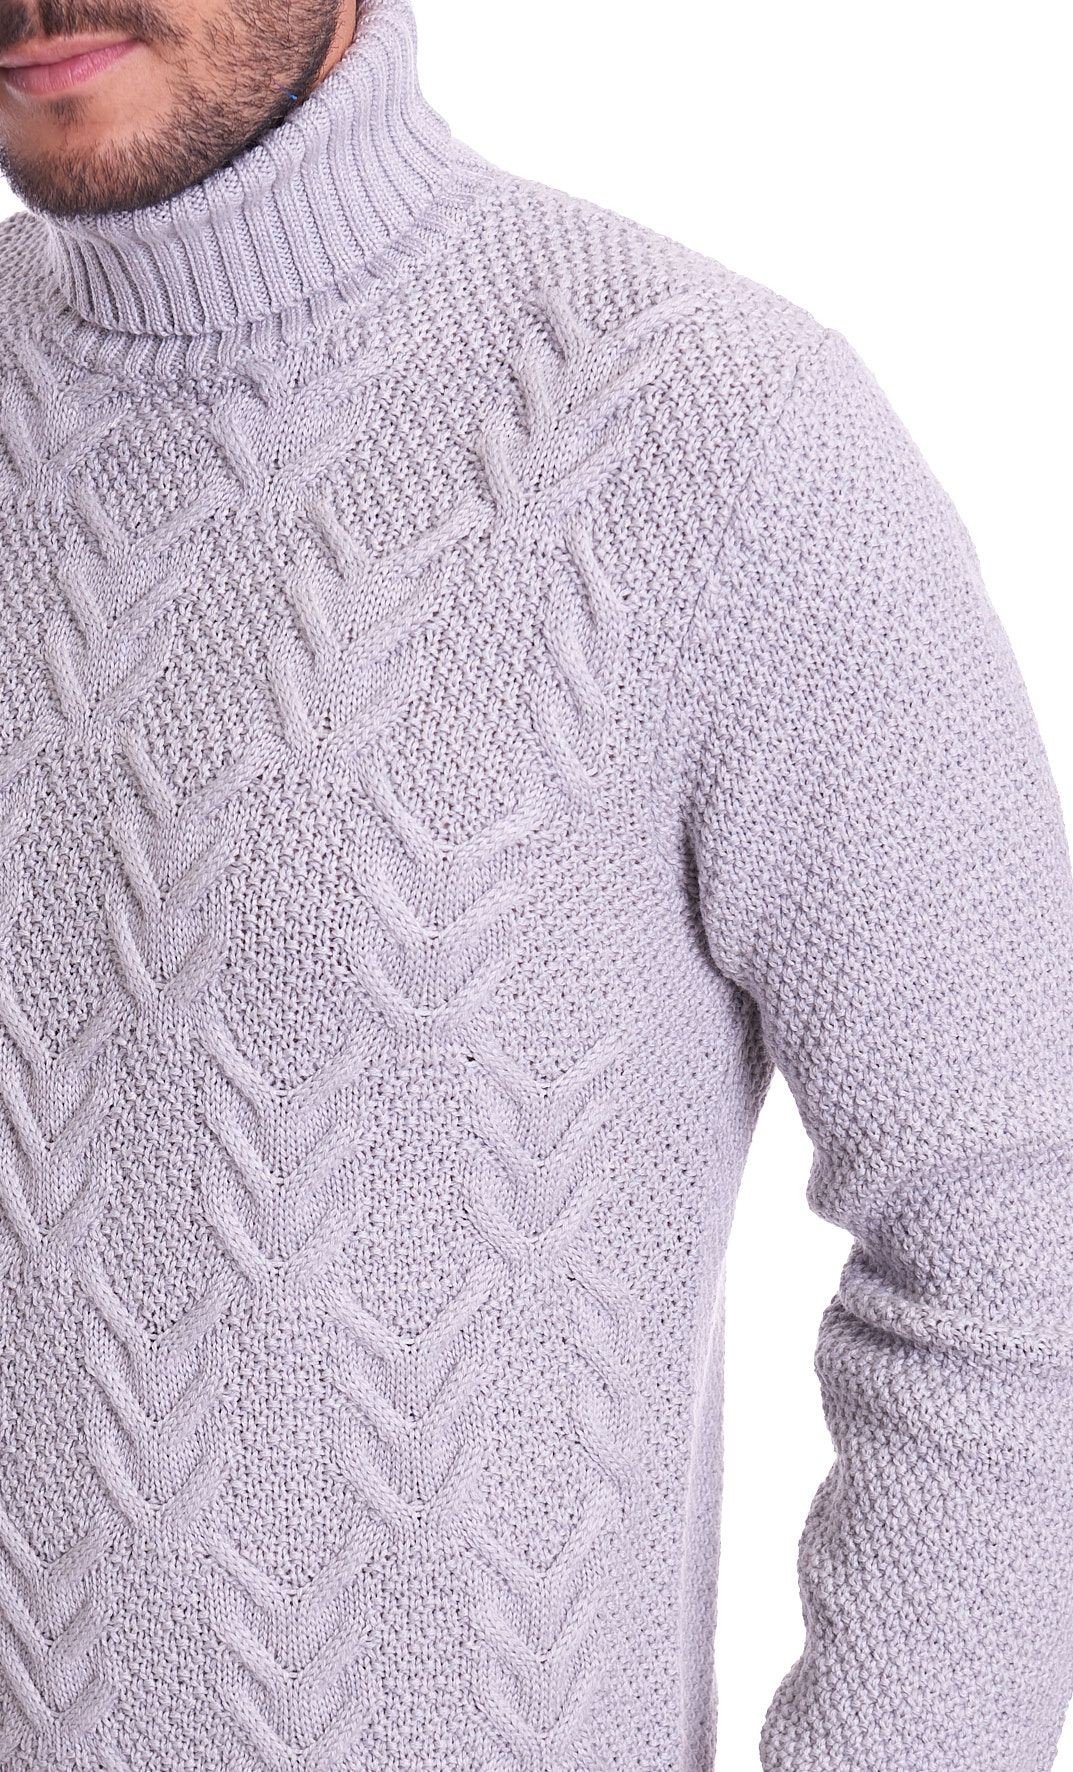 Men's turtleneck sweater Heritage pure merino wool grey